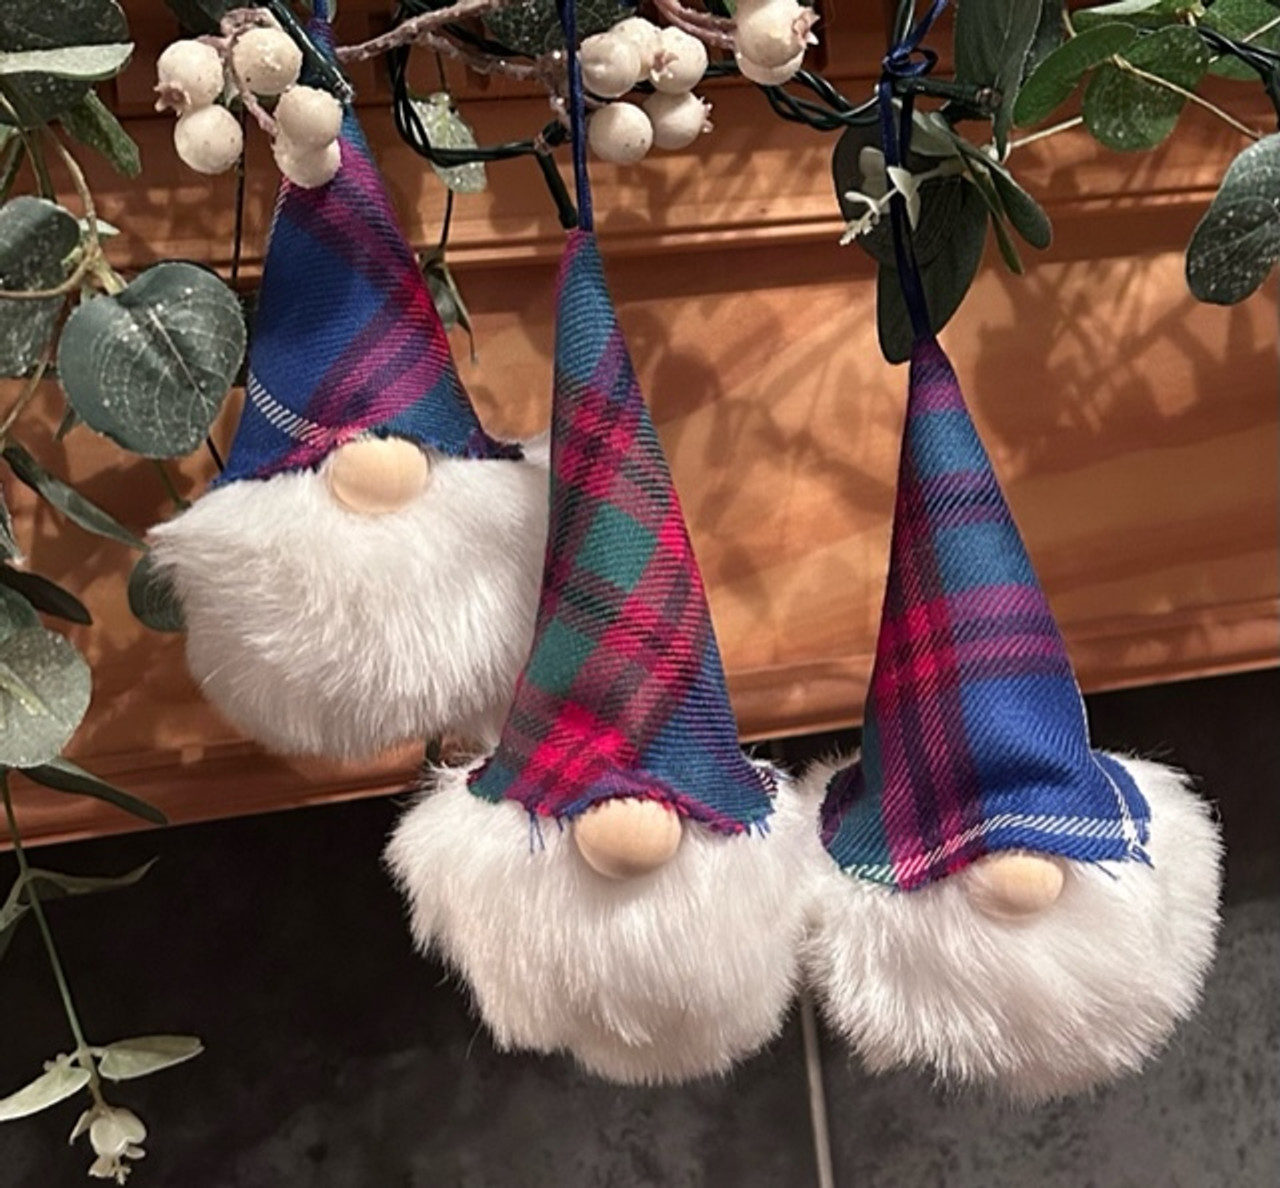 Christmas Gnomes Ornament, Set of 2